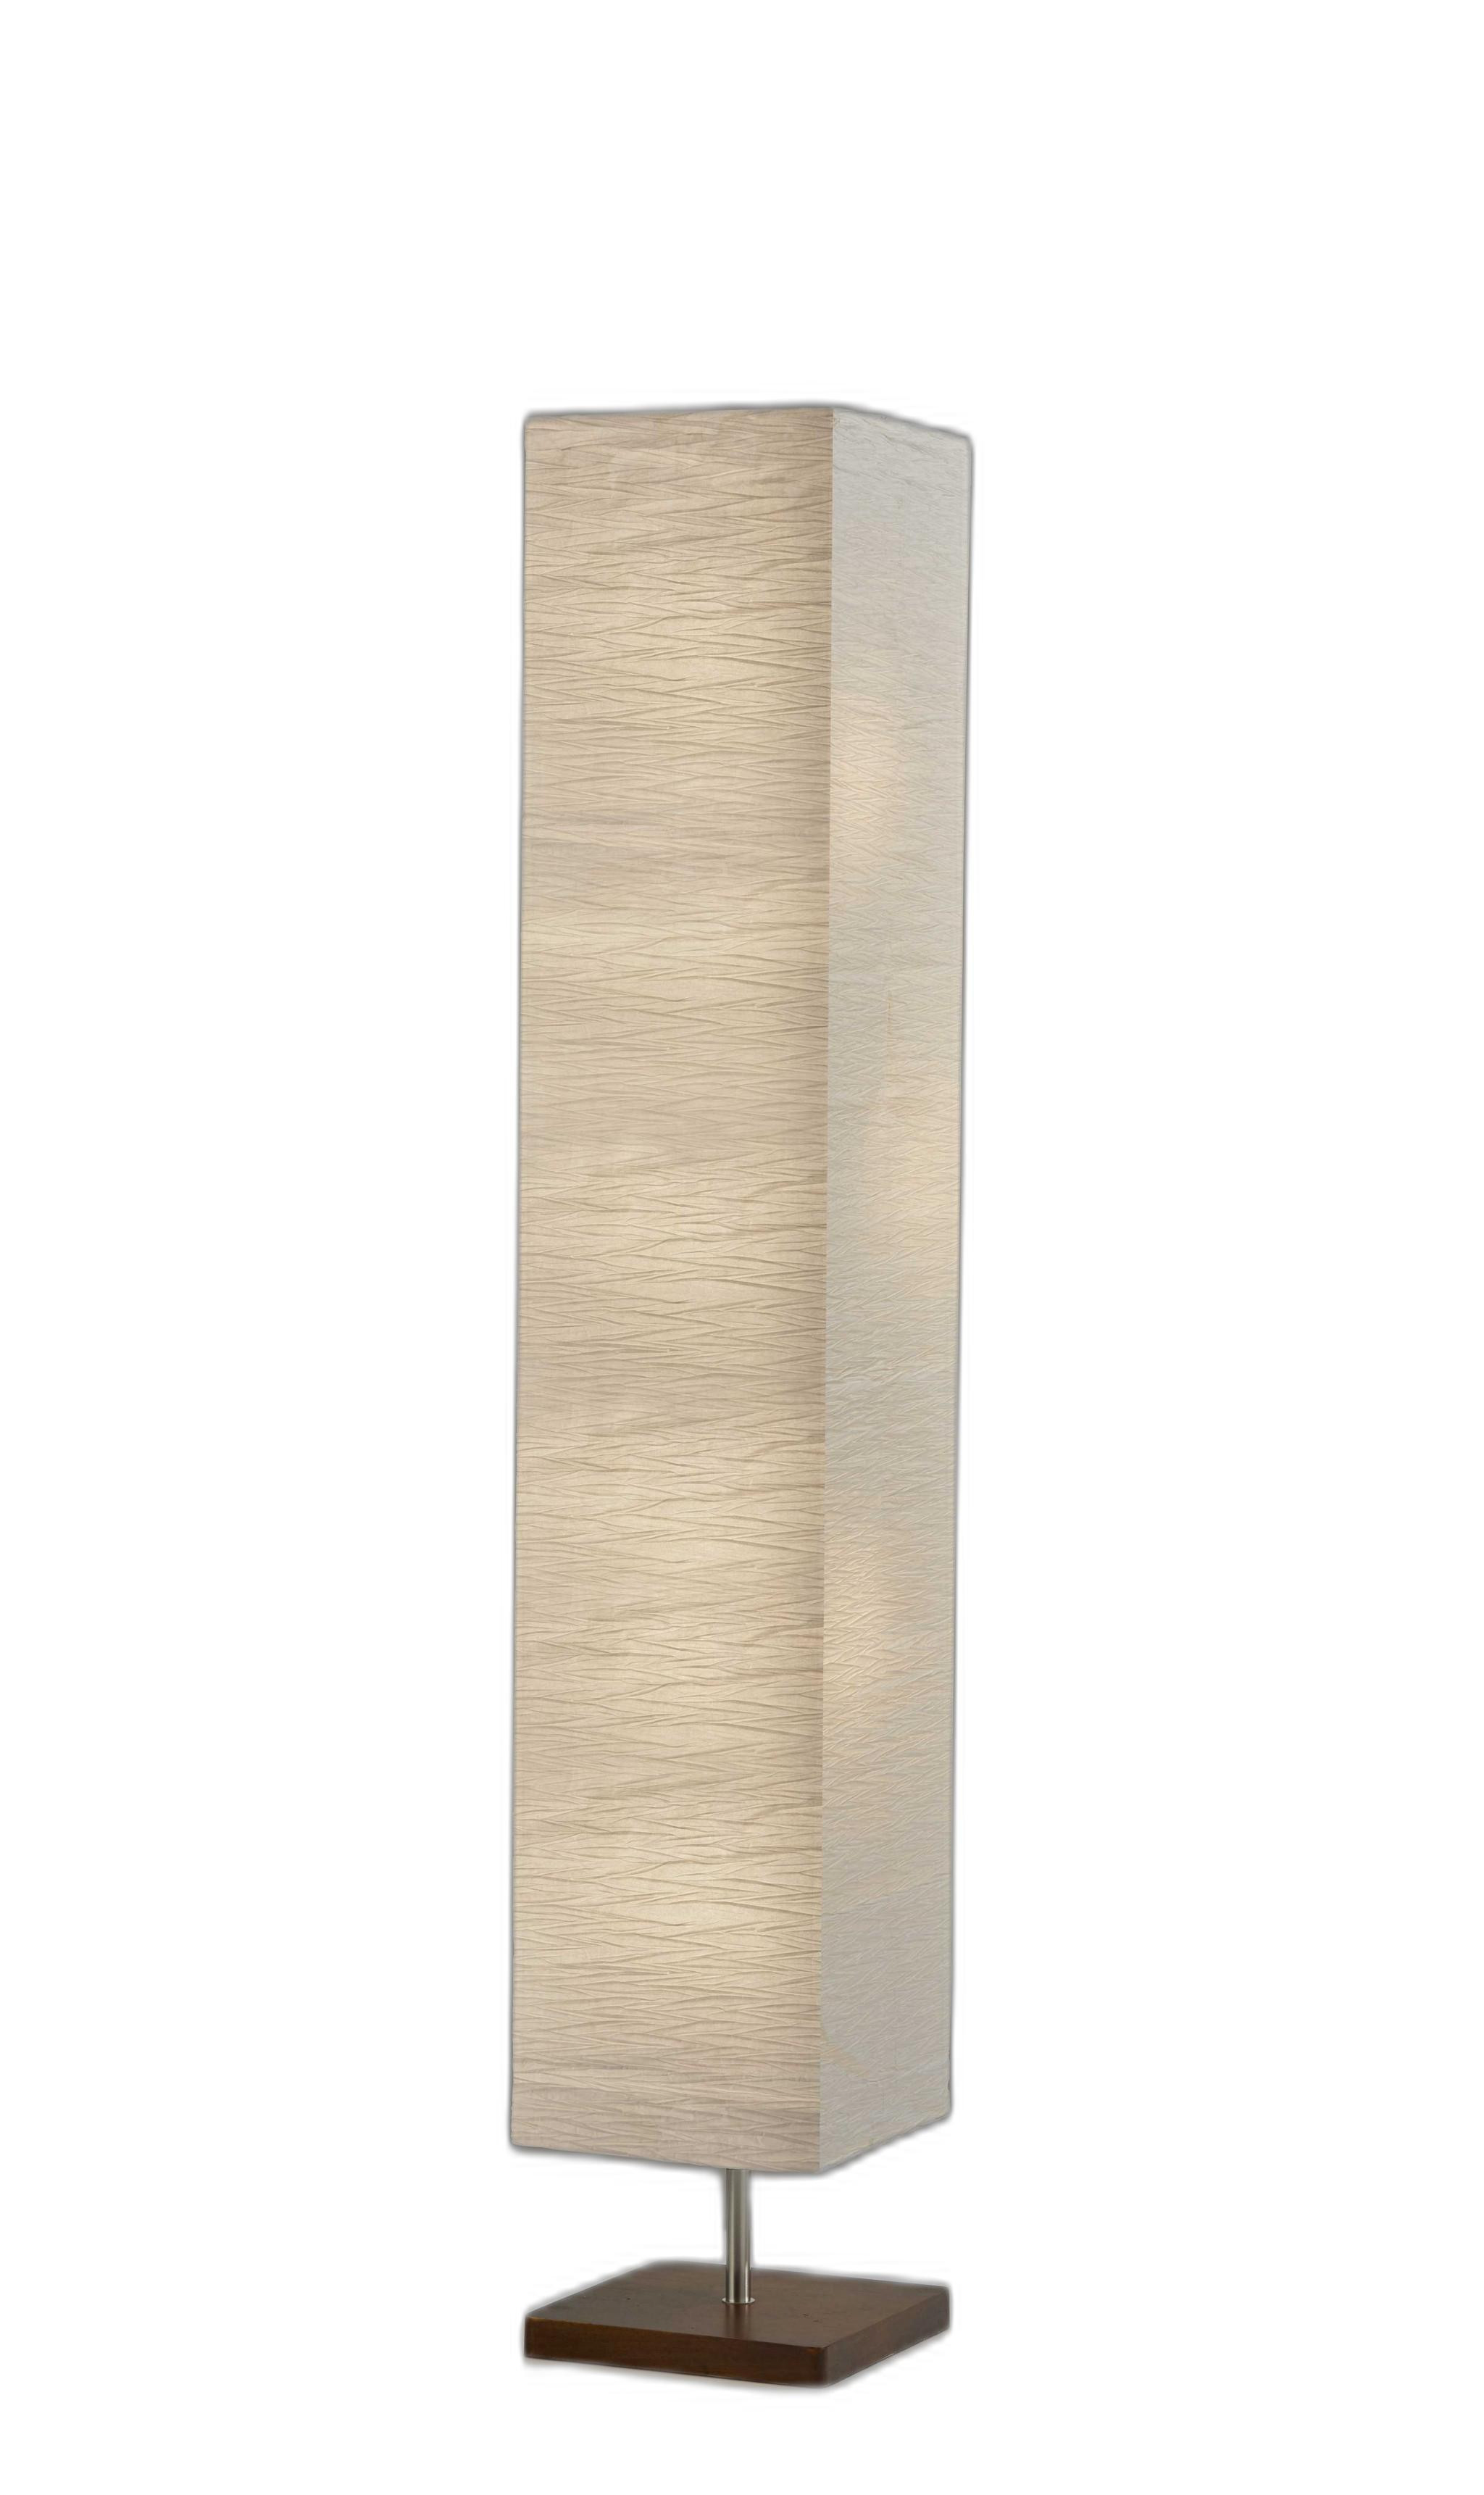 HomeRoots Lighting Wildside Paper Shade Floor Lamp with Walnut Wood Base